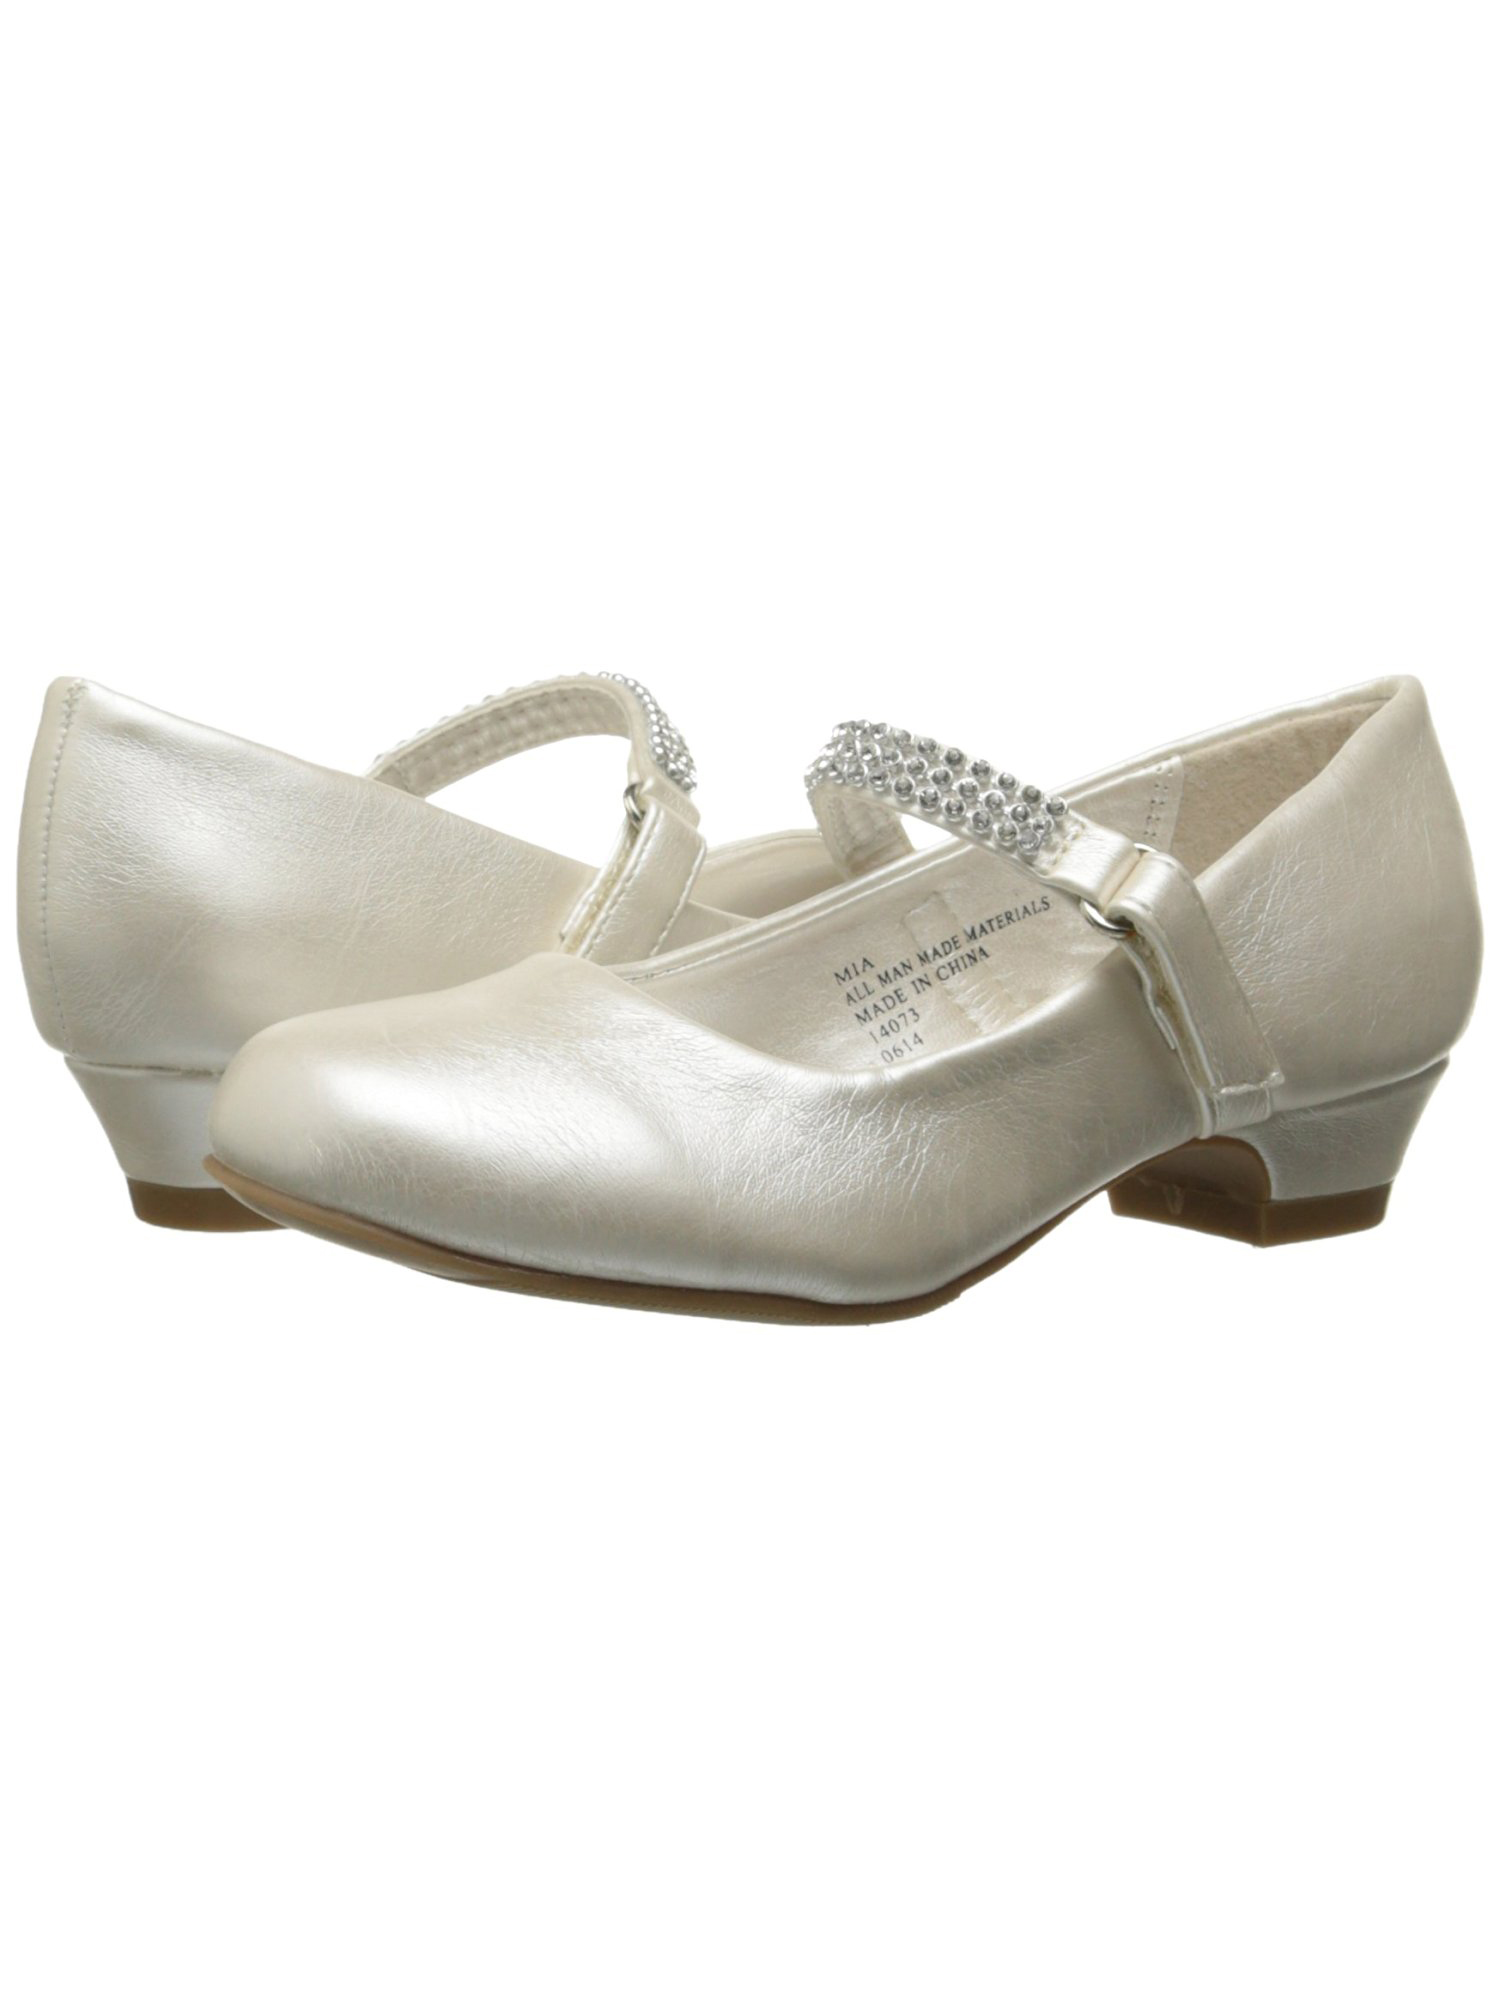 Girls Low Heel Dress Shoe With Rhinestone Strap (2, White)